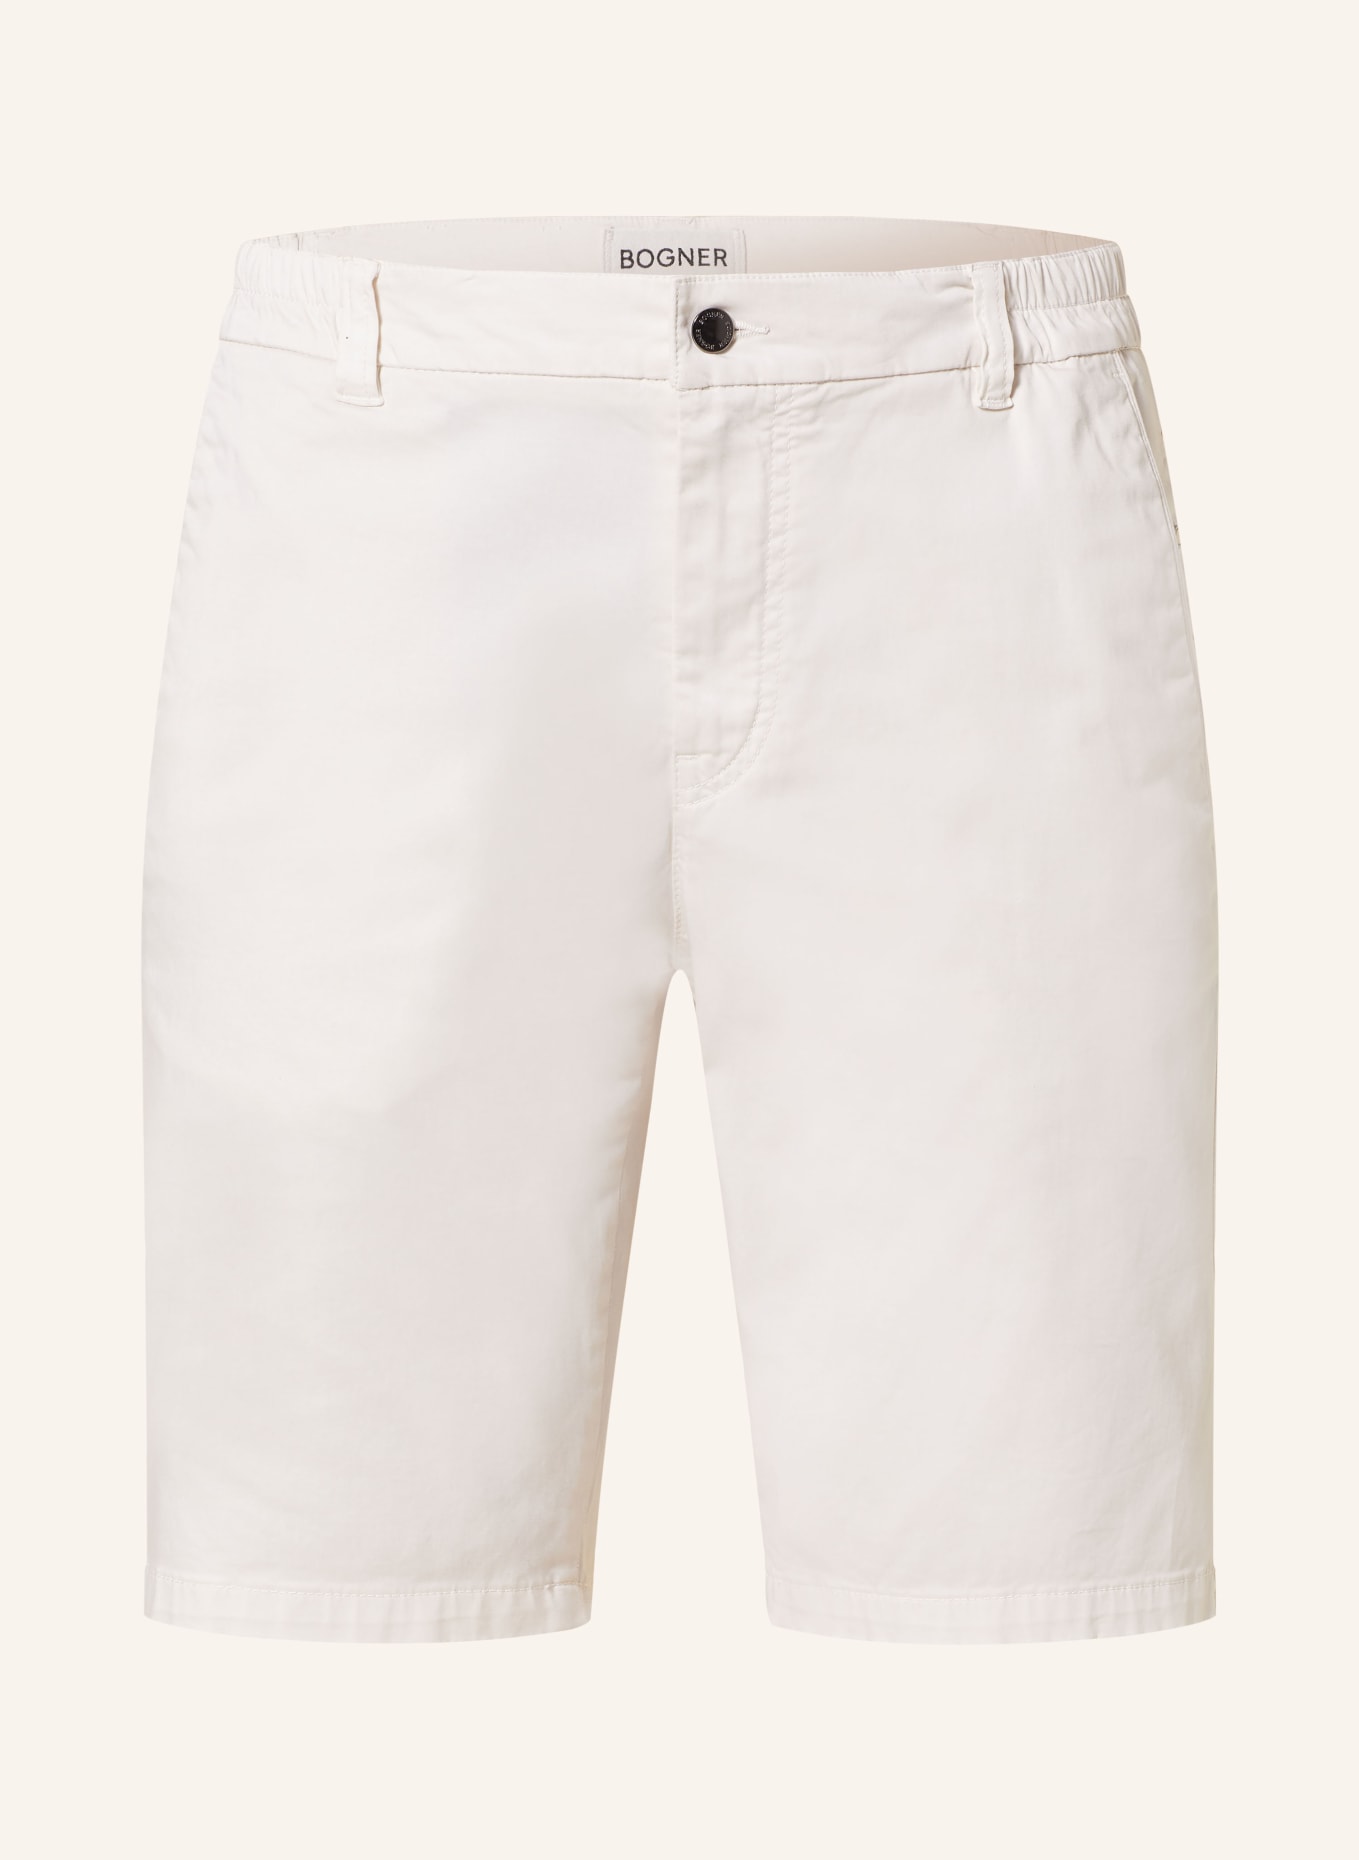 BOGNER Shorts MIAMI-G6, Farbe: CREME (Bild 1)